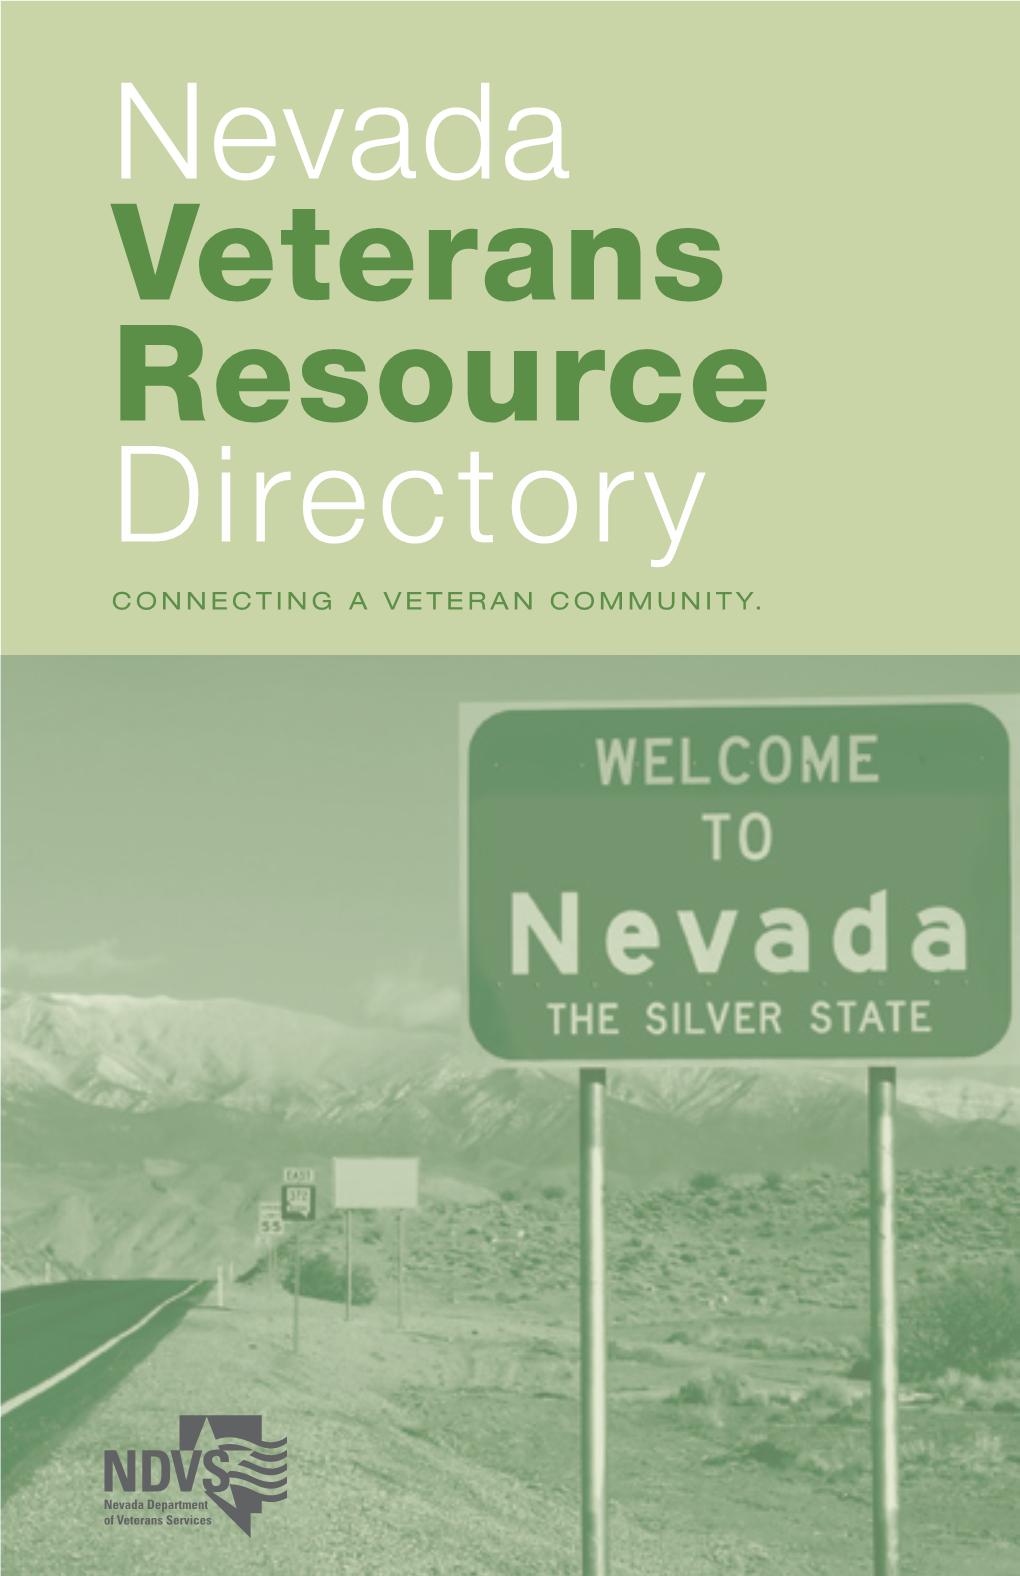 Nevada Veterans Resource Directory CONNECTING a VETERAN COMMUNITY